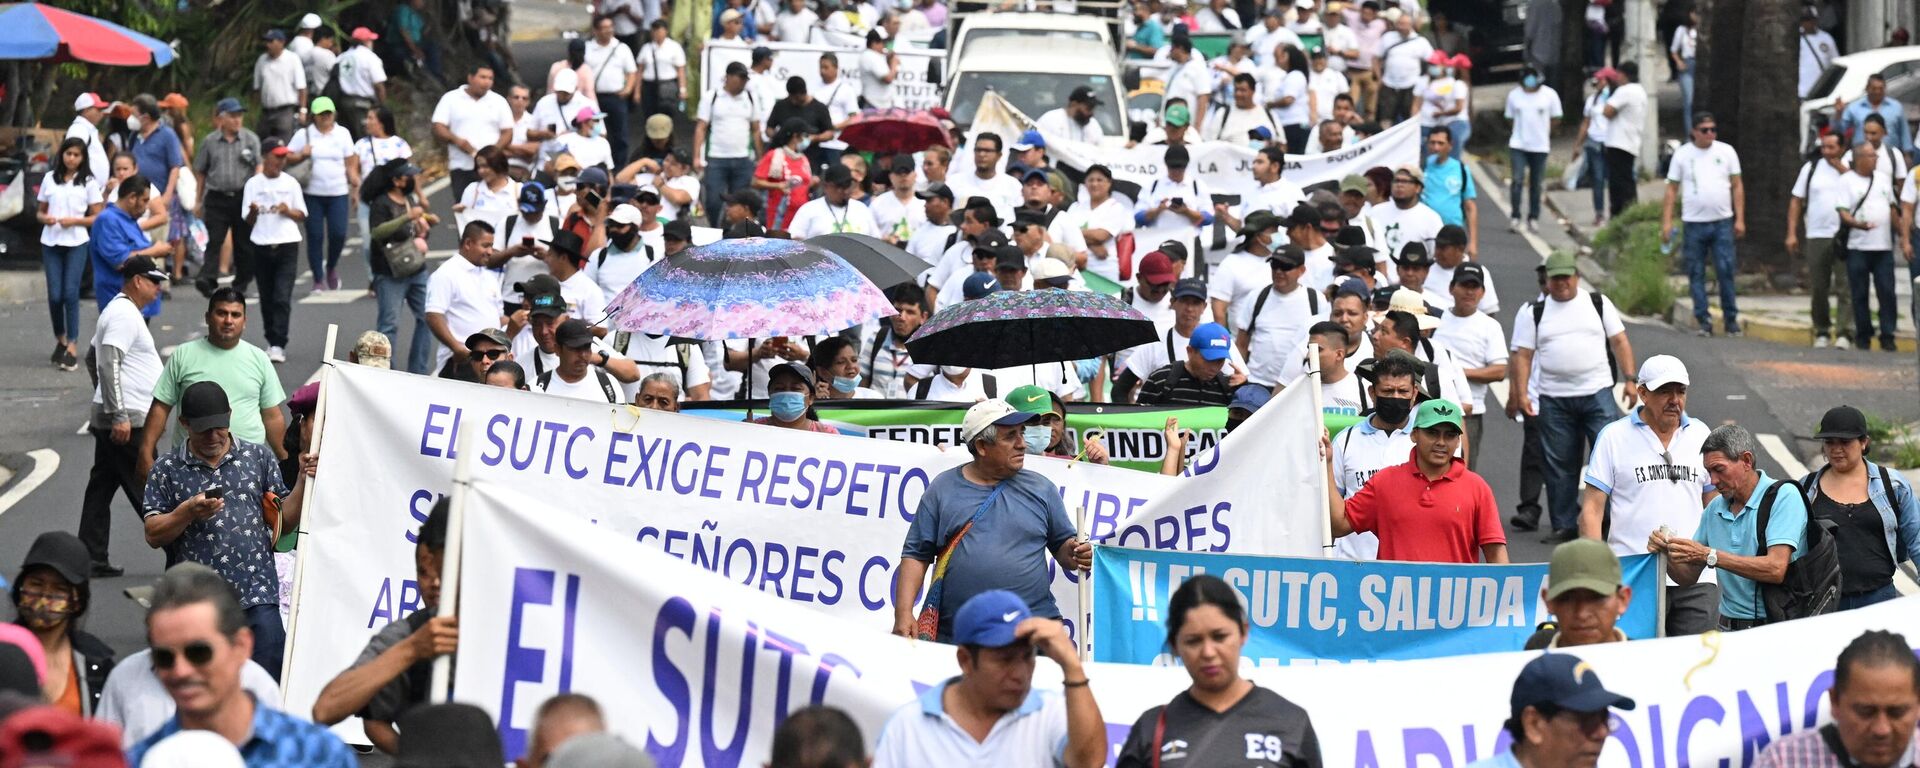 Manifestación en apoyo a la reelección del presidente salvadoreño Nayib Bukele - Sputnik Mundo, 1920, 01.05.2023